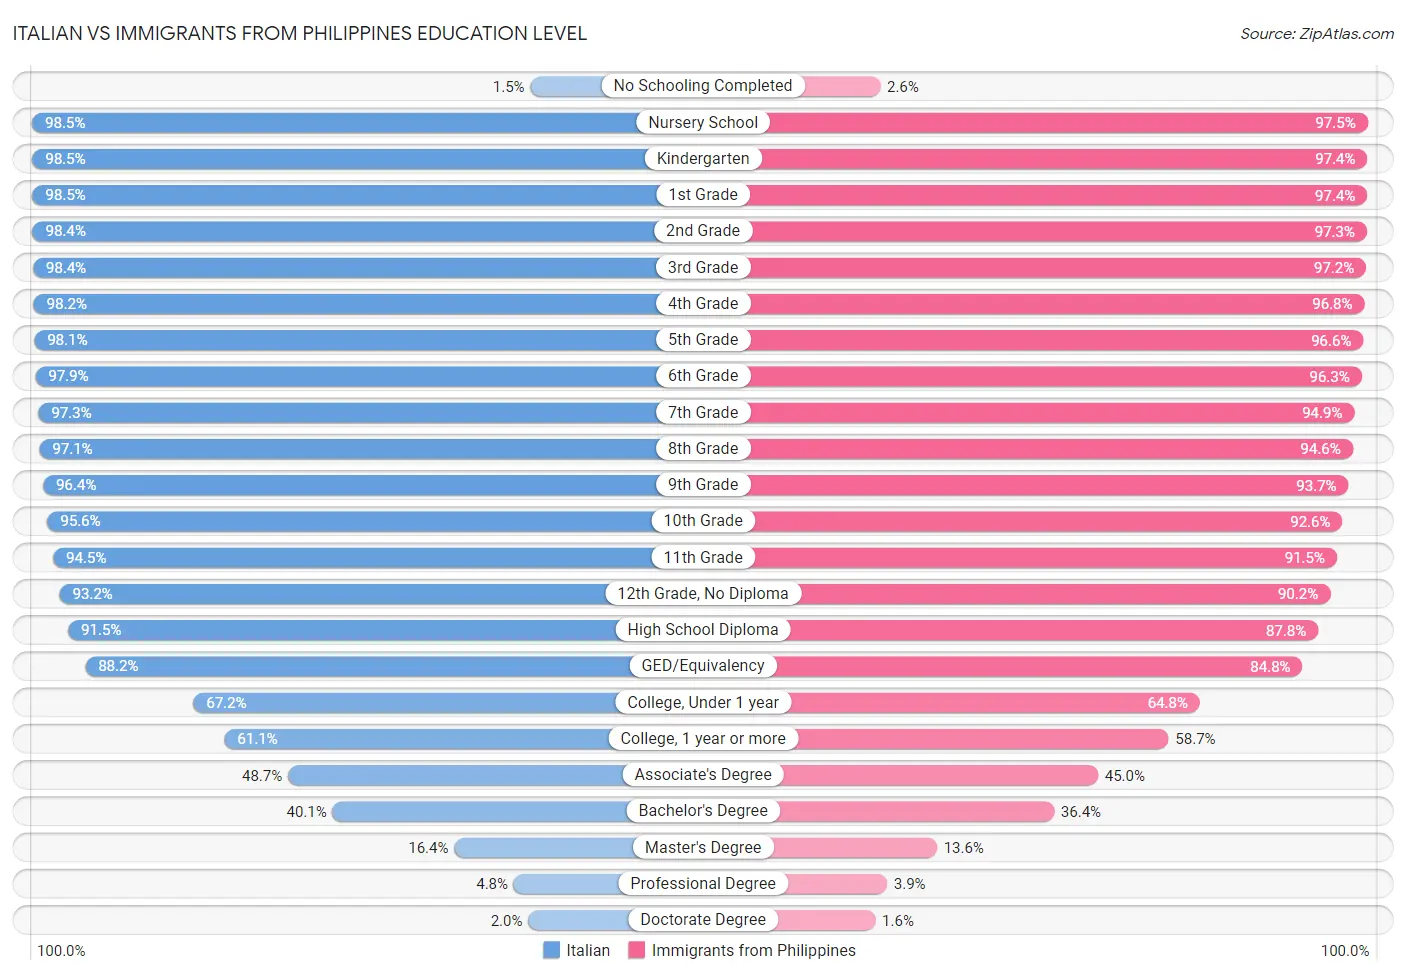 Italian vs Immigrants from Philippines Education Level